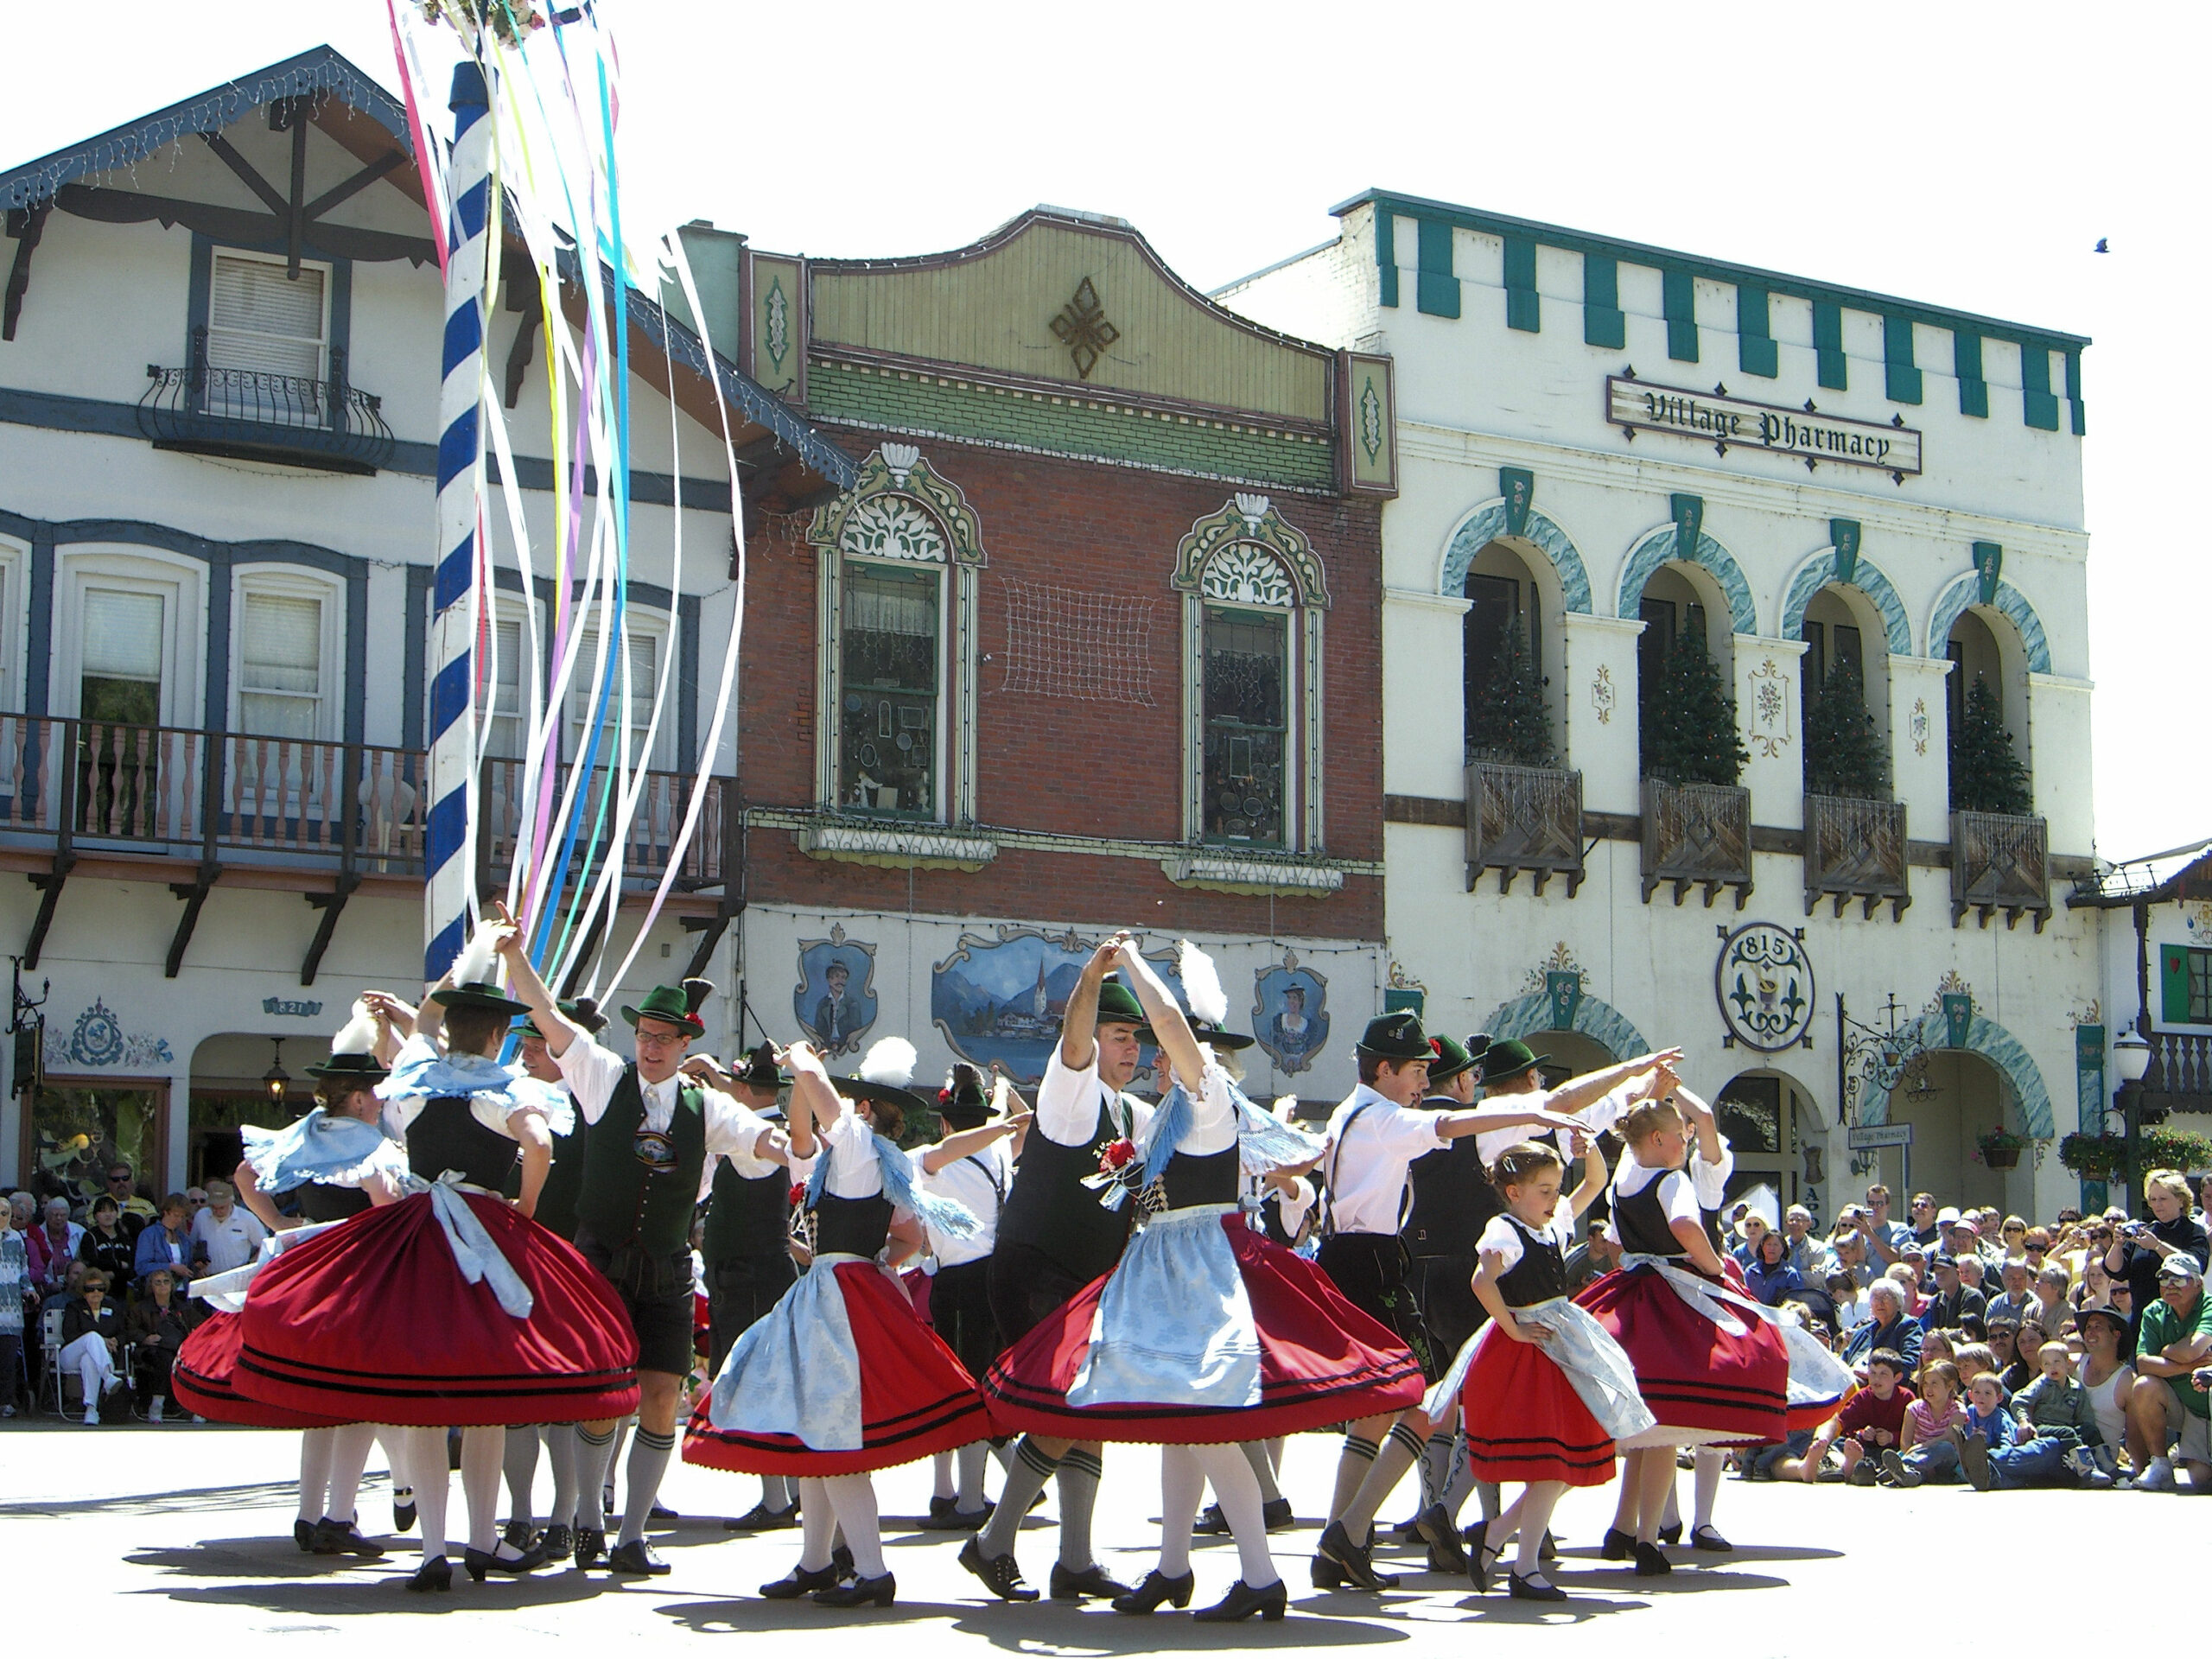 Local residents dance in lederhosen and dirndls during Leavenworth's annual Maifest festival.